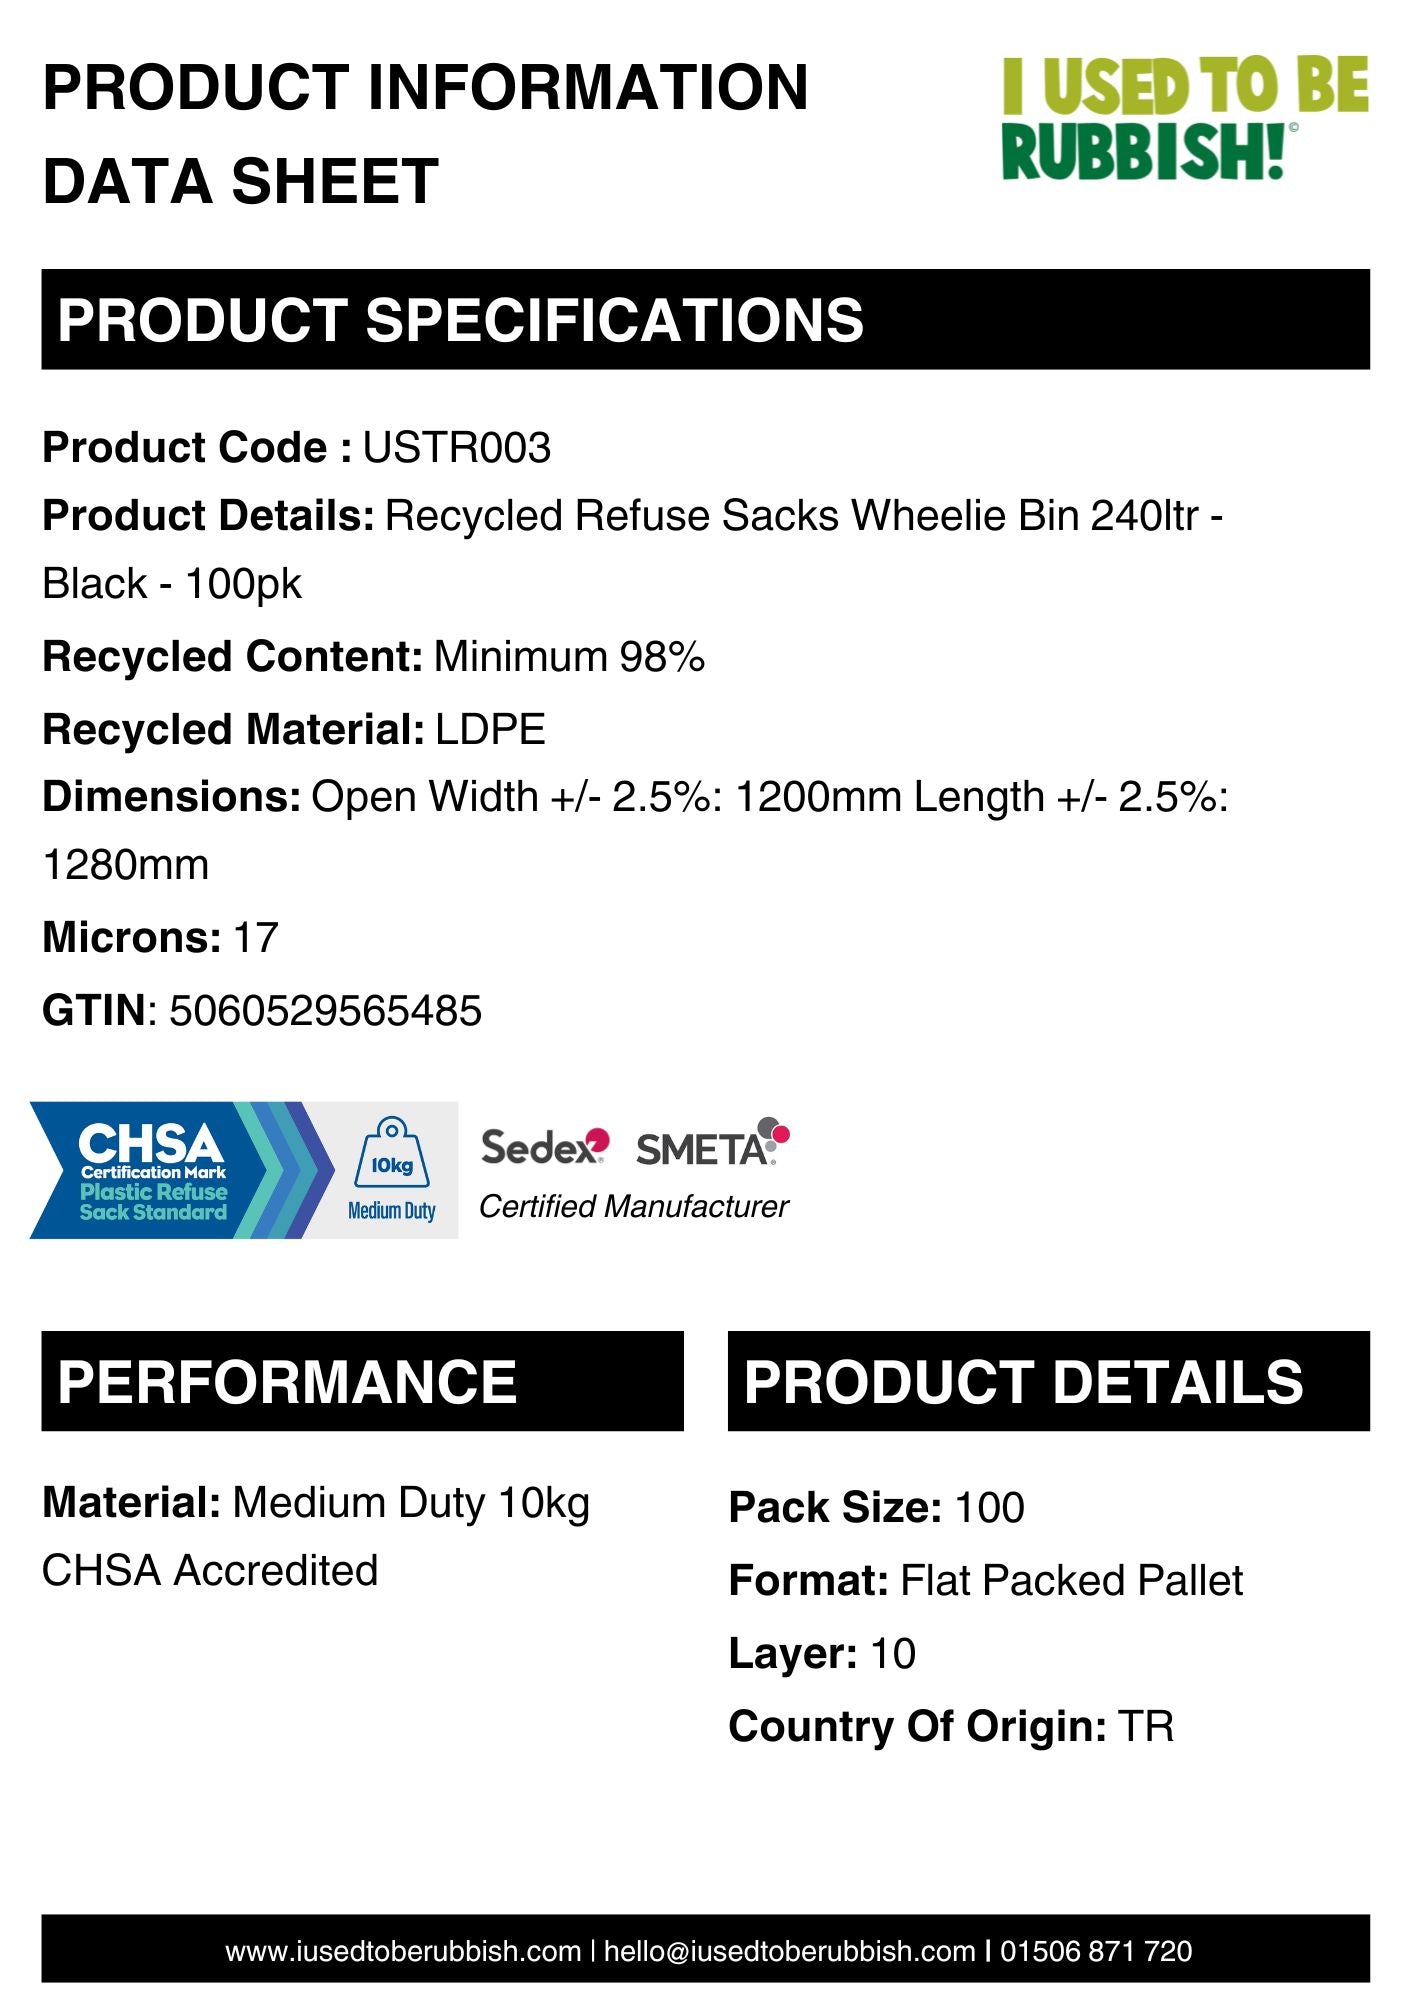 PALLET - Recycled Refuse Sacks Wheelie Bin 240ltr - Black - 99 x 100pk (USTR003)